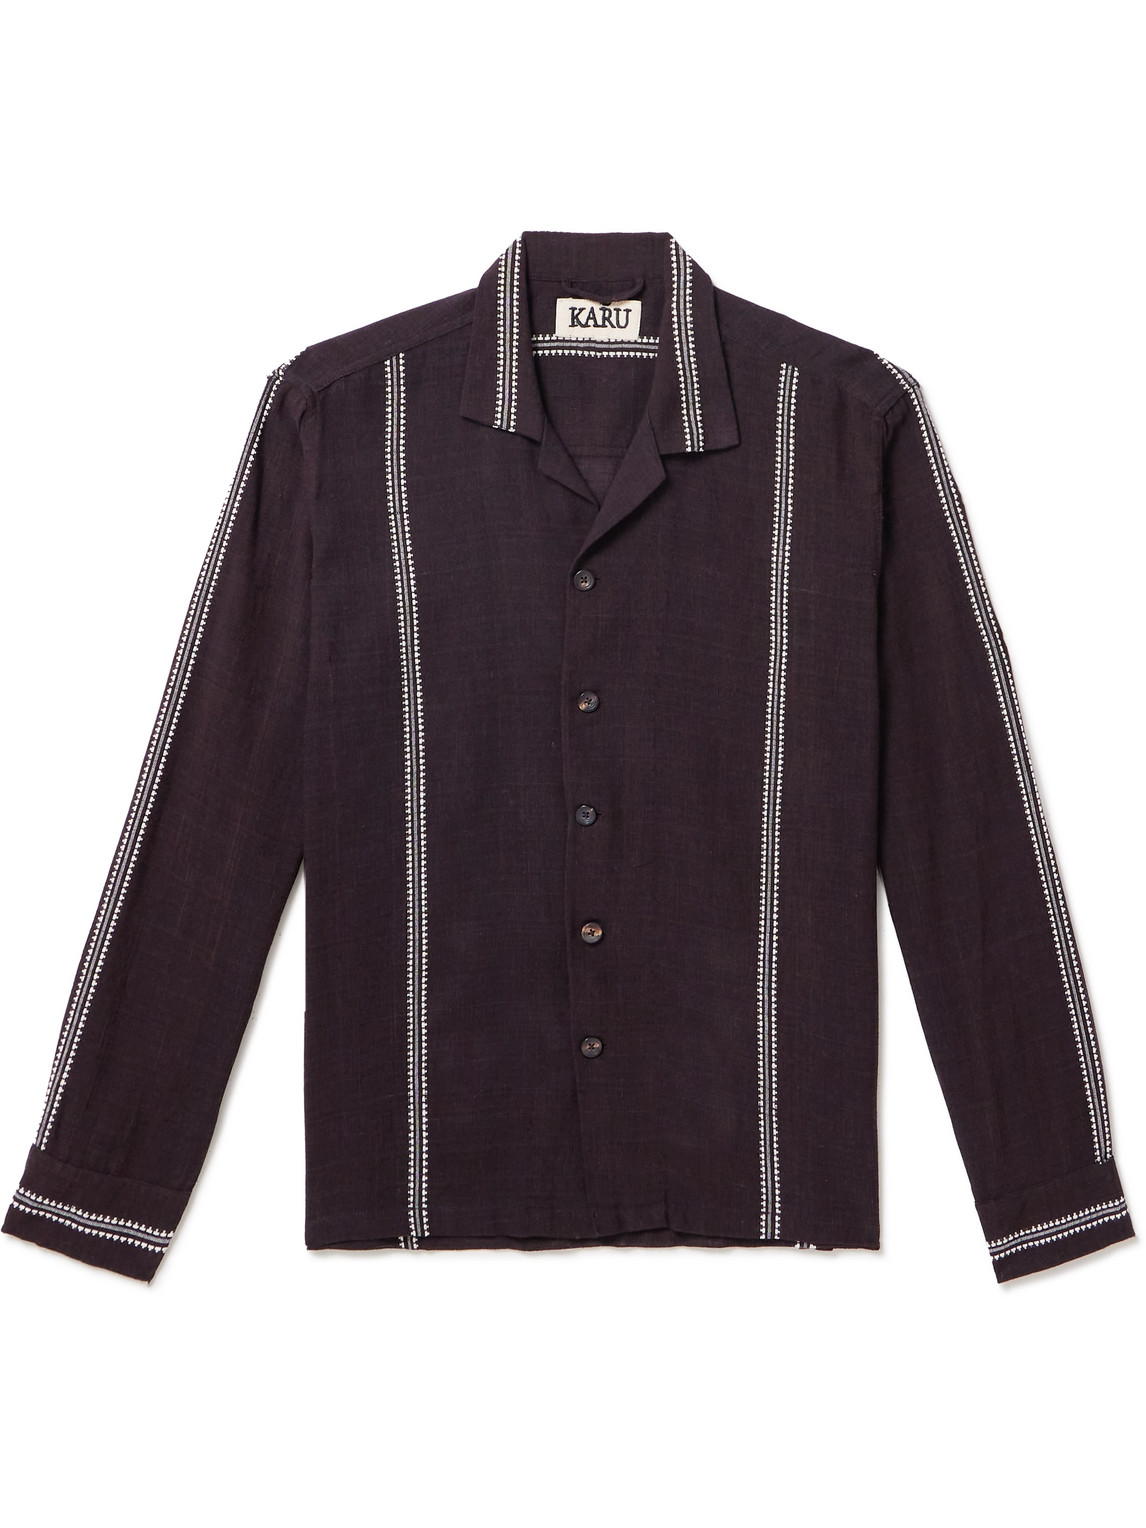 Kartik Research - Camp-Collar Cotton-Jacquard Shirt - Men - Purple - S von Kartik Research